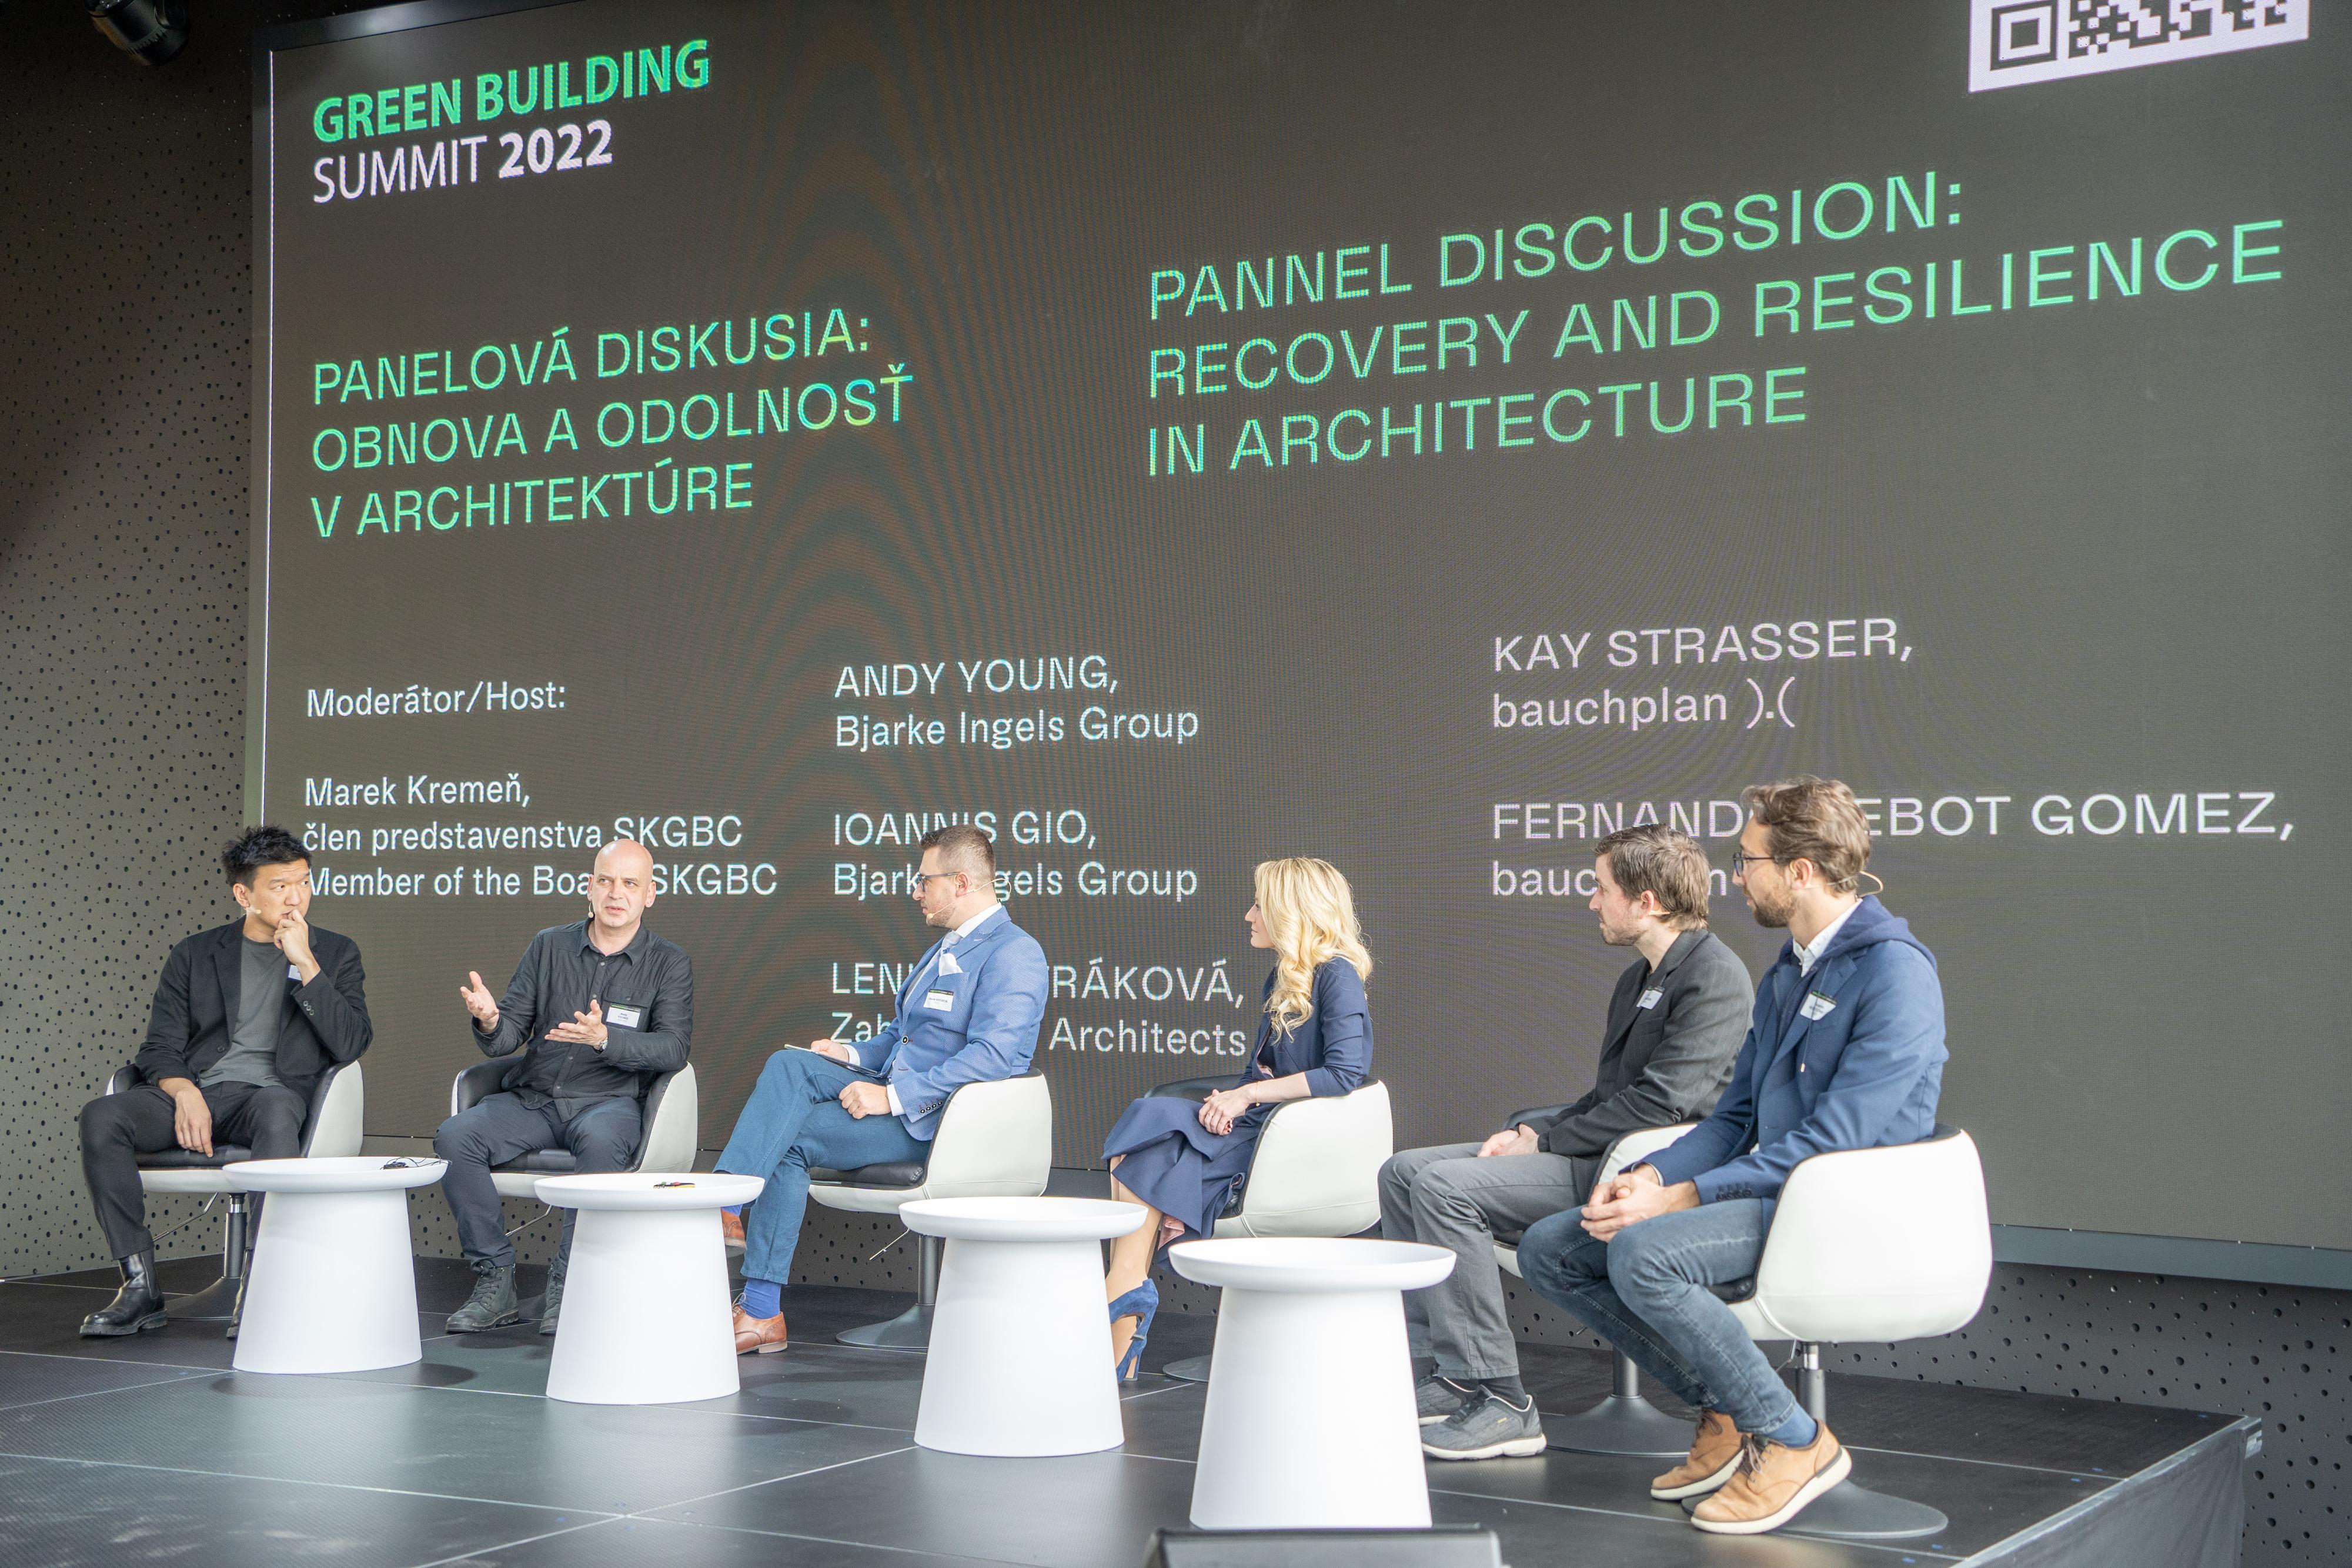 Green building summit 2022